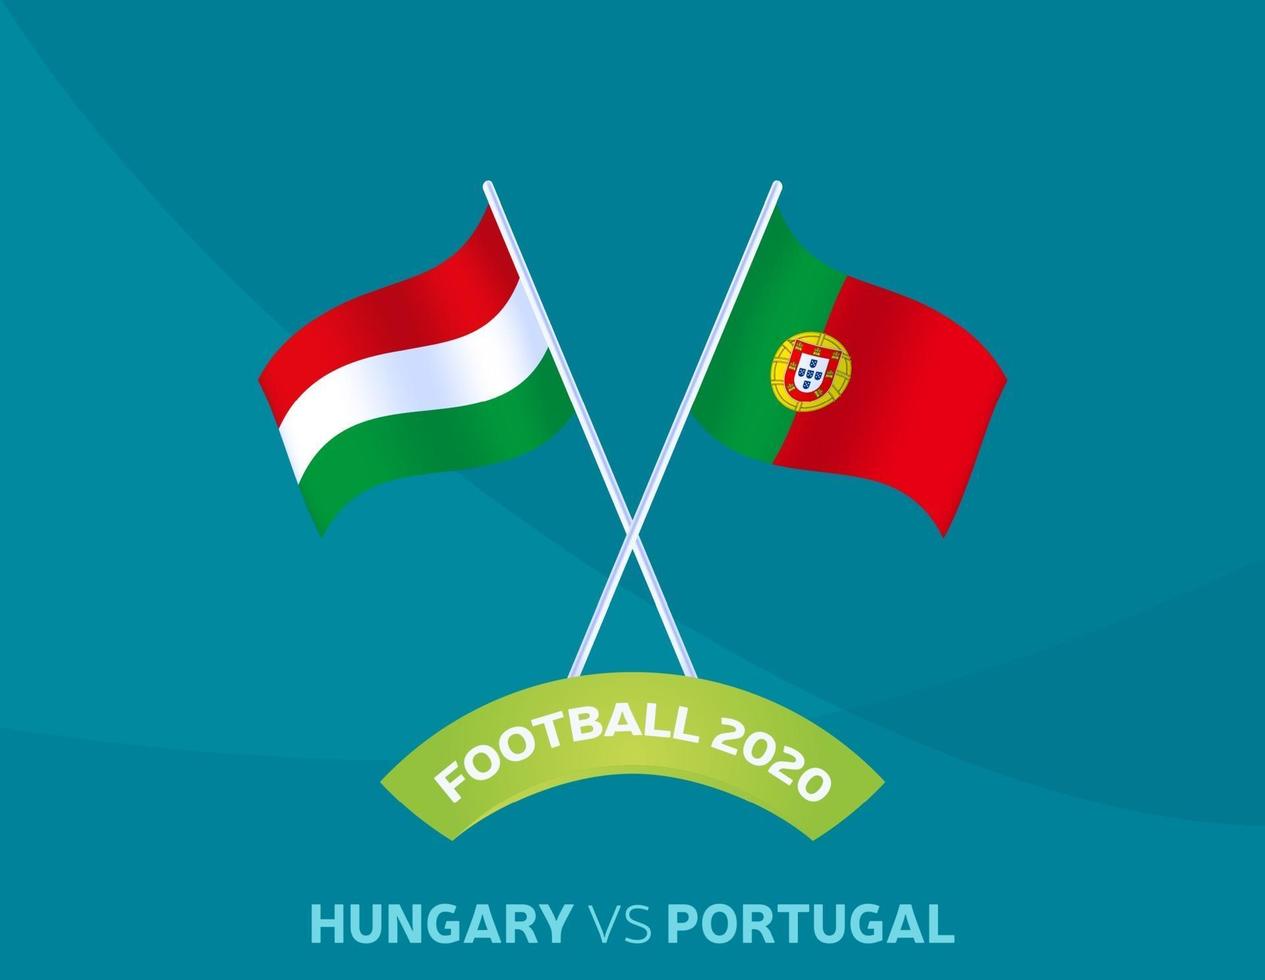 Hungary vs Portugal football vector